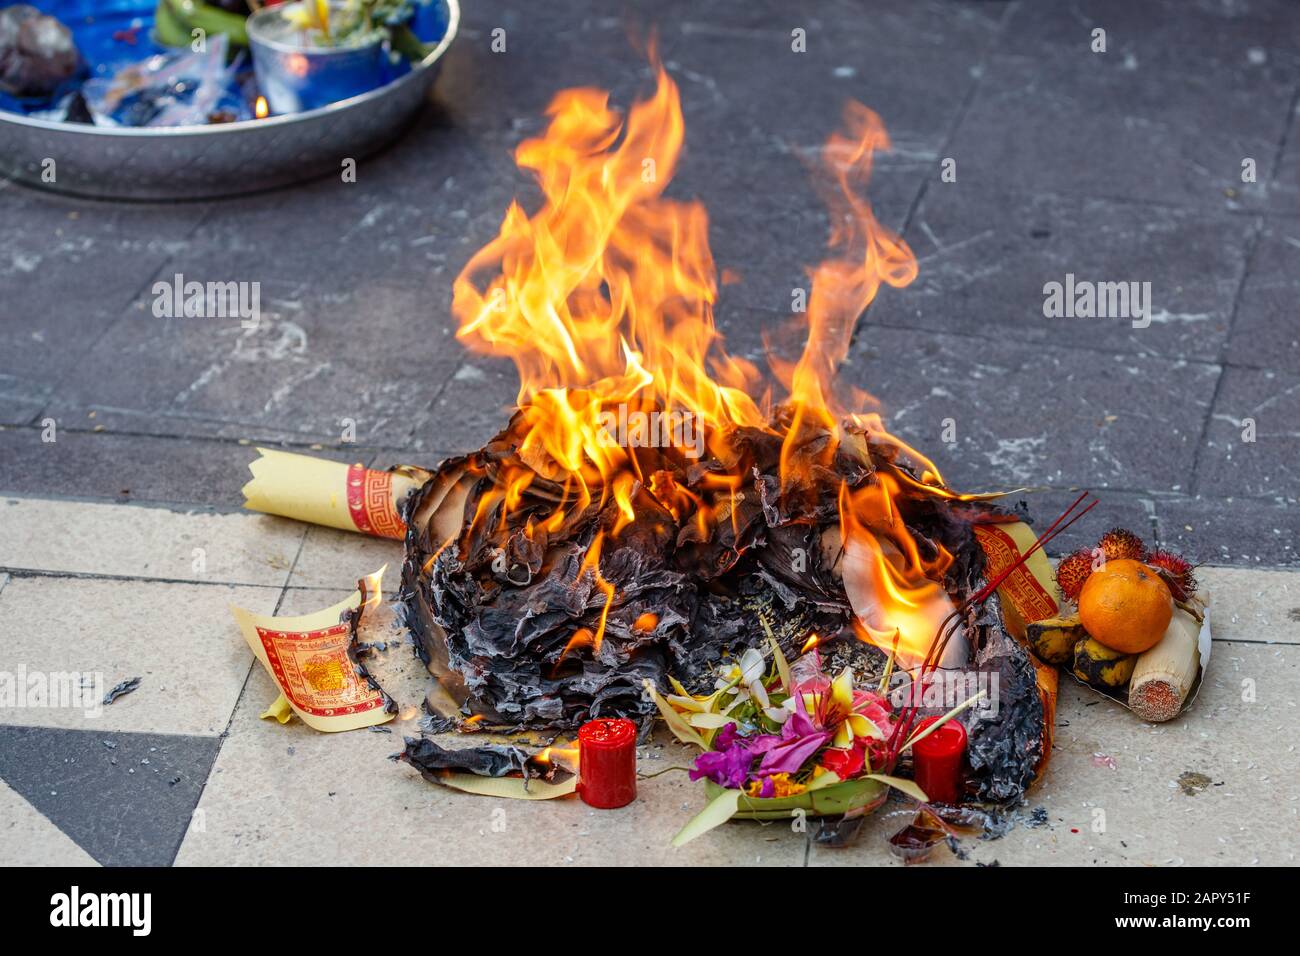 Burning offerings for Lunar New Year (Imlek) celebration ceremony at